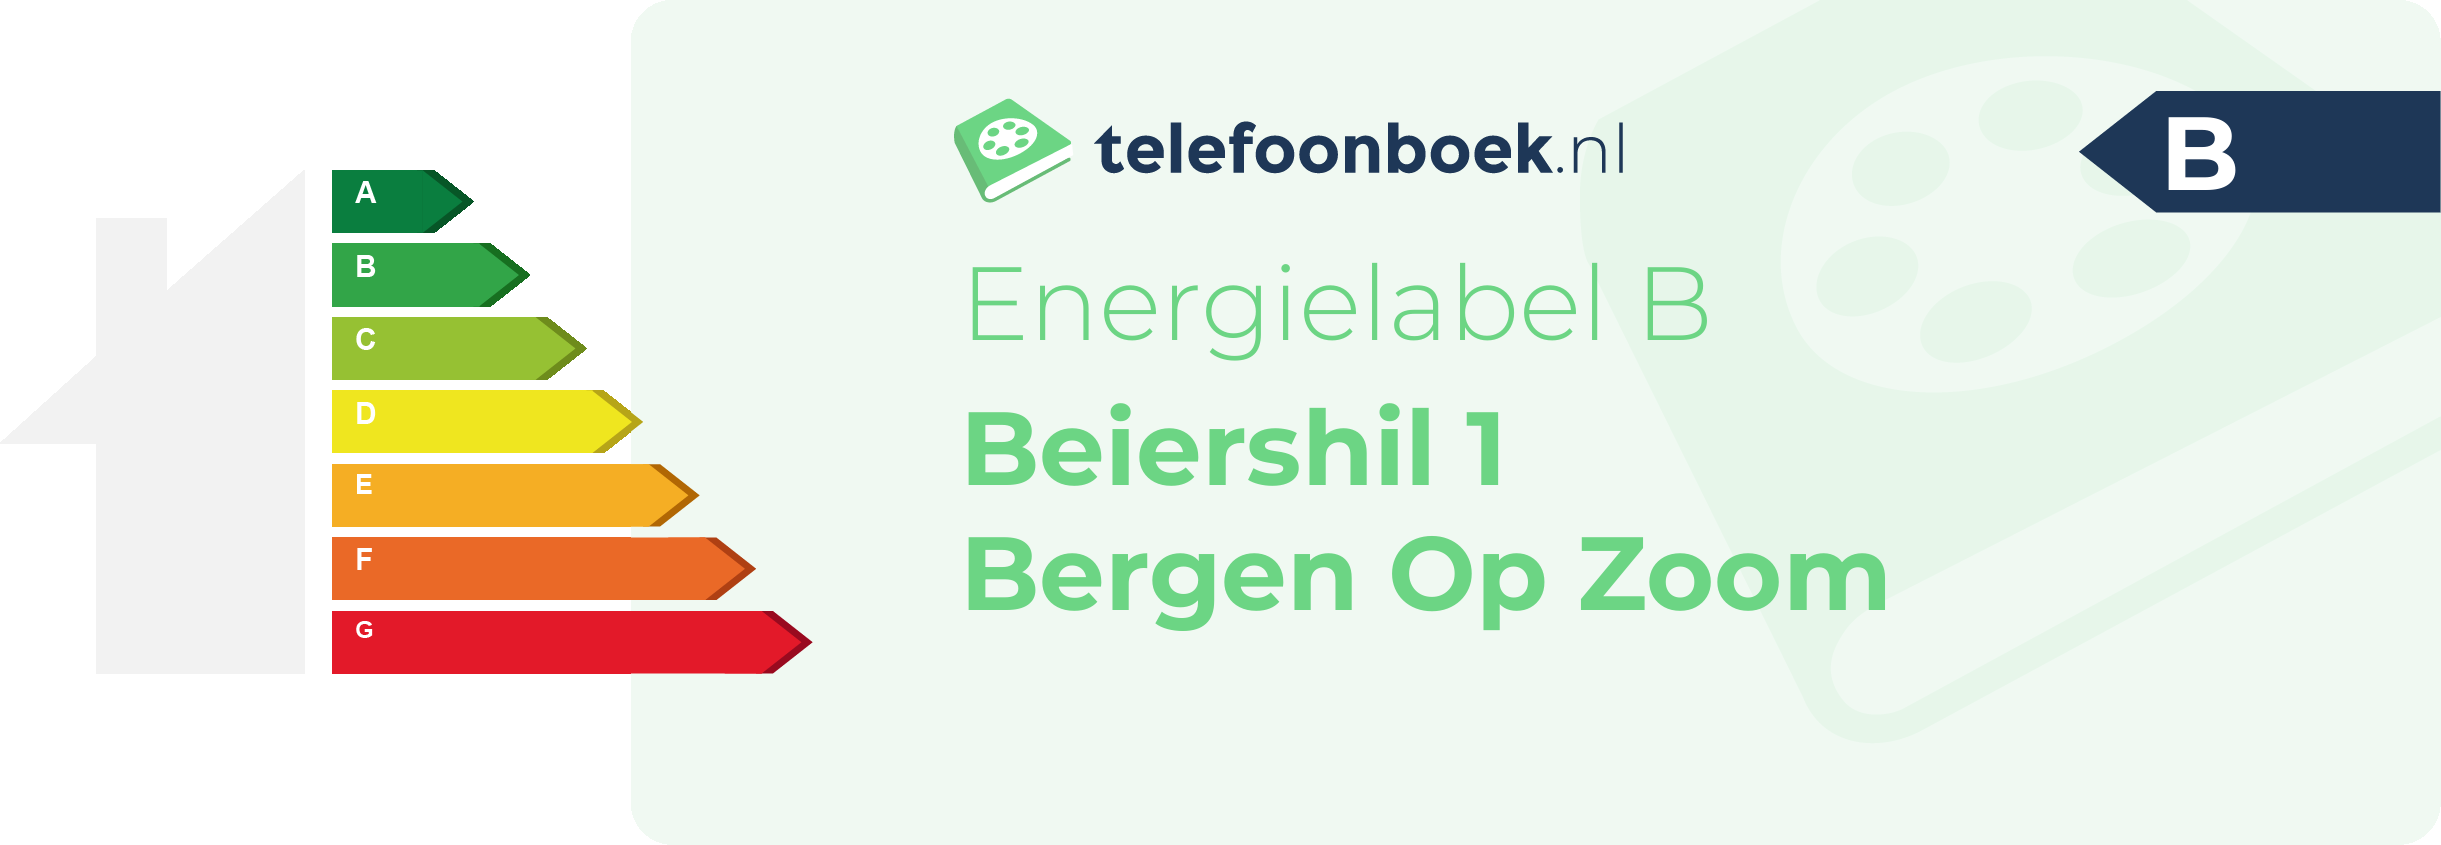 Energielabel Beiershil 1 Bergen Op Zoom